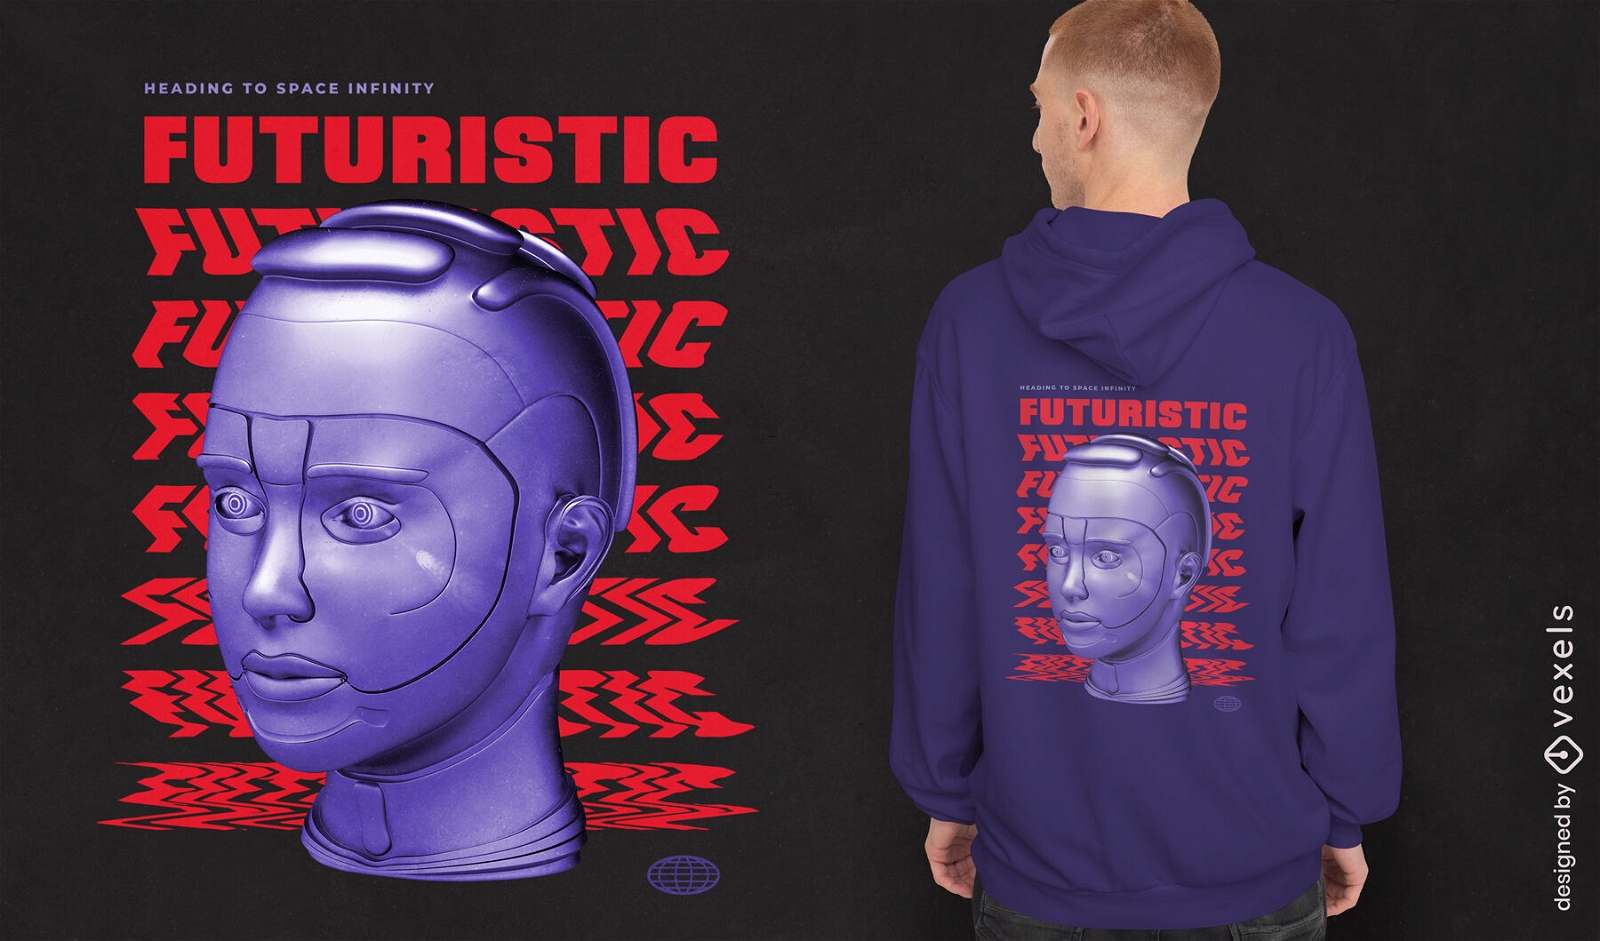 Diseño de camiseta PSD de cabeza de robot futurista